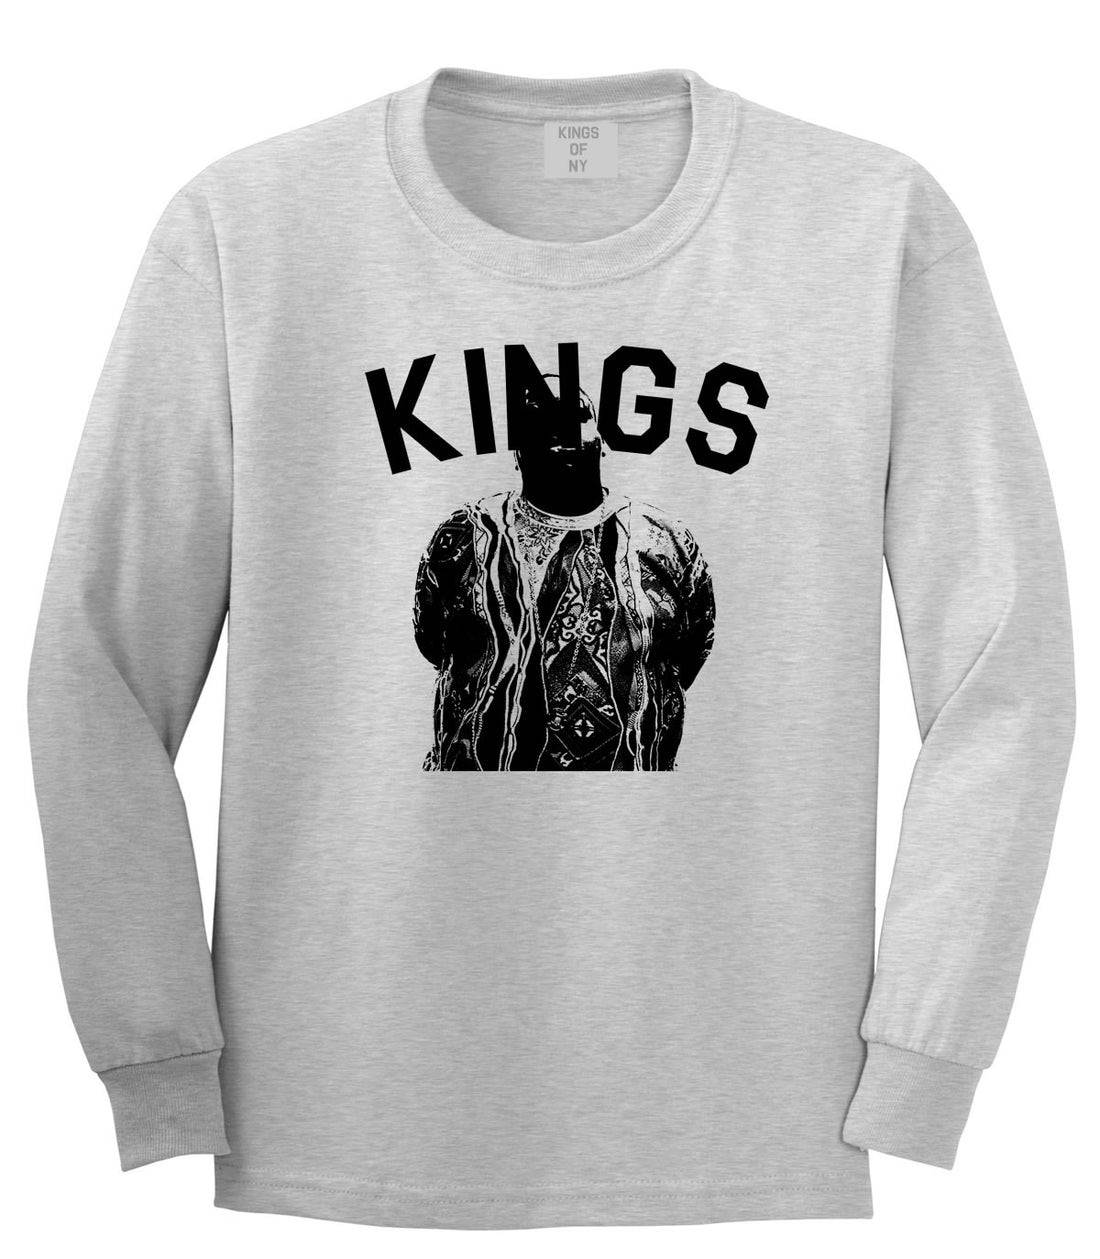 Kings Biggie Smalls Long Sleeve T-Shirt By Kings Of NY